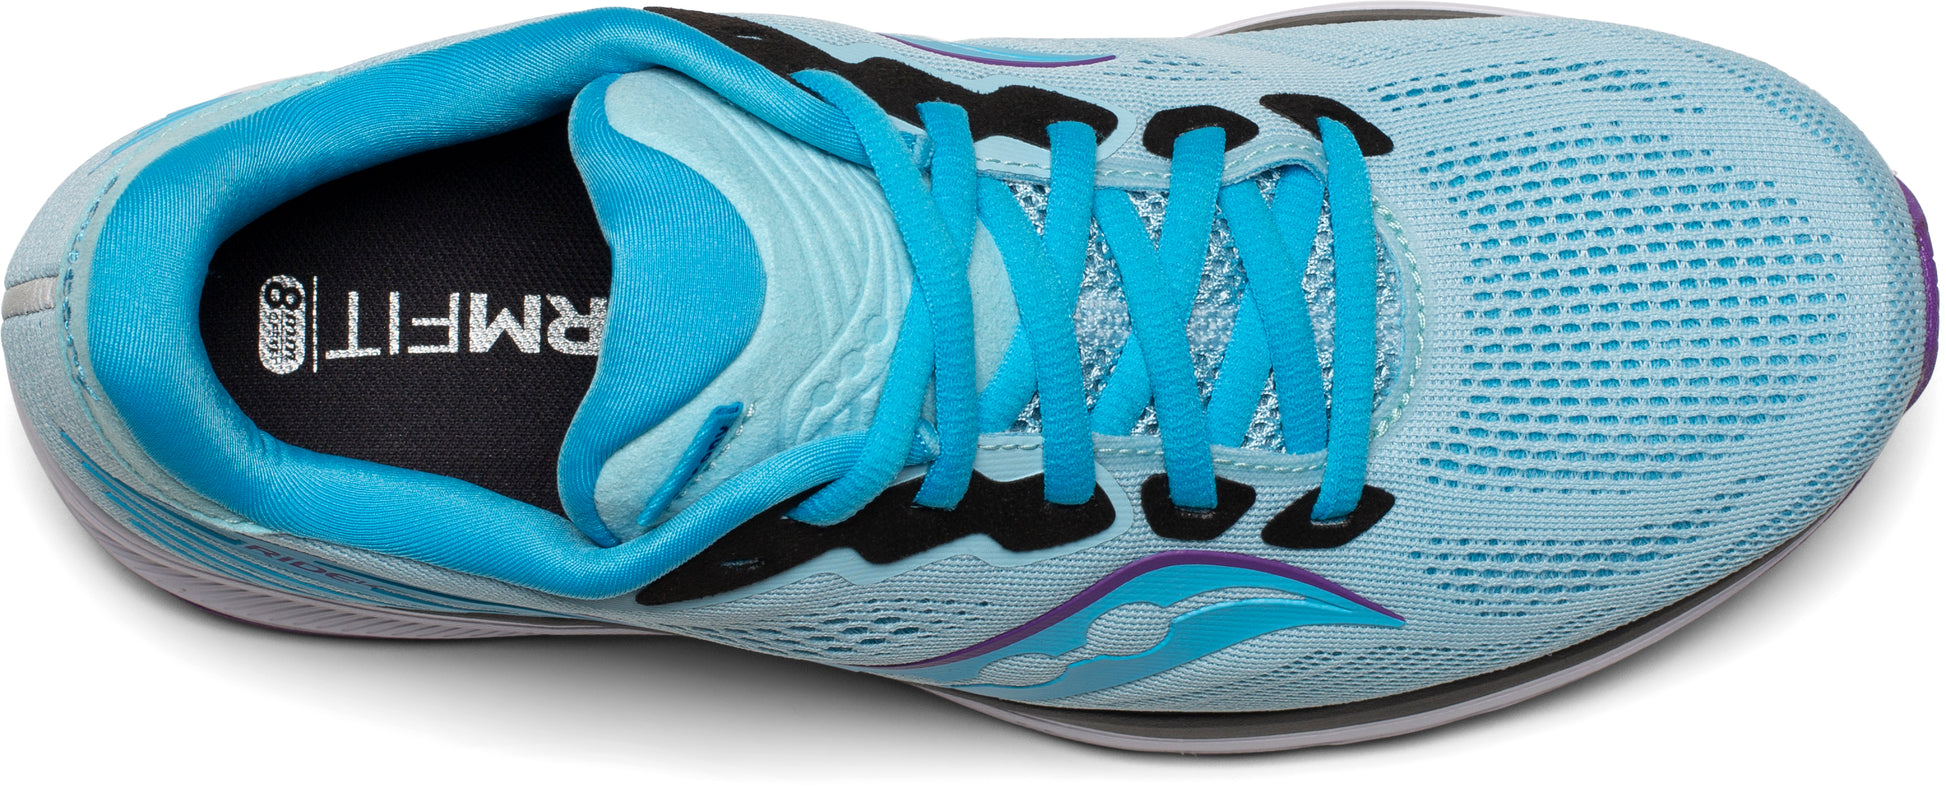 Saucony Ride 14 women's running shoe, light blue running shoes, neutral shoe, marathon, half marathon road running shoe